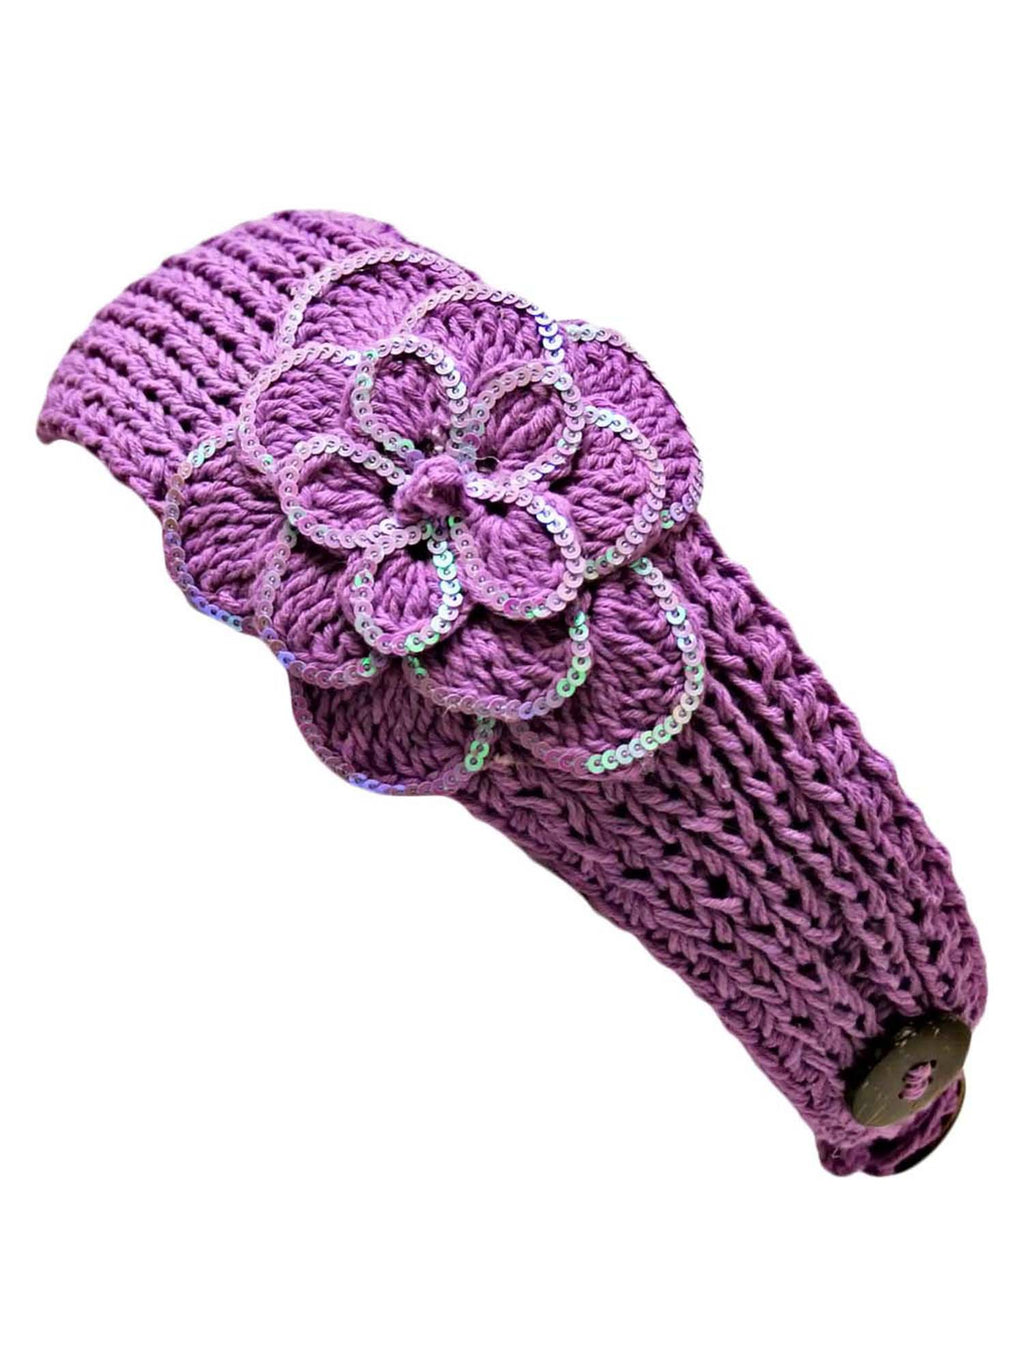 Crochet Headband With Sequin Flower Detail